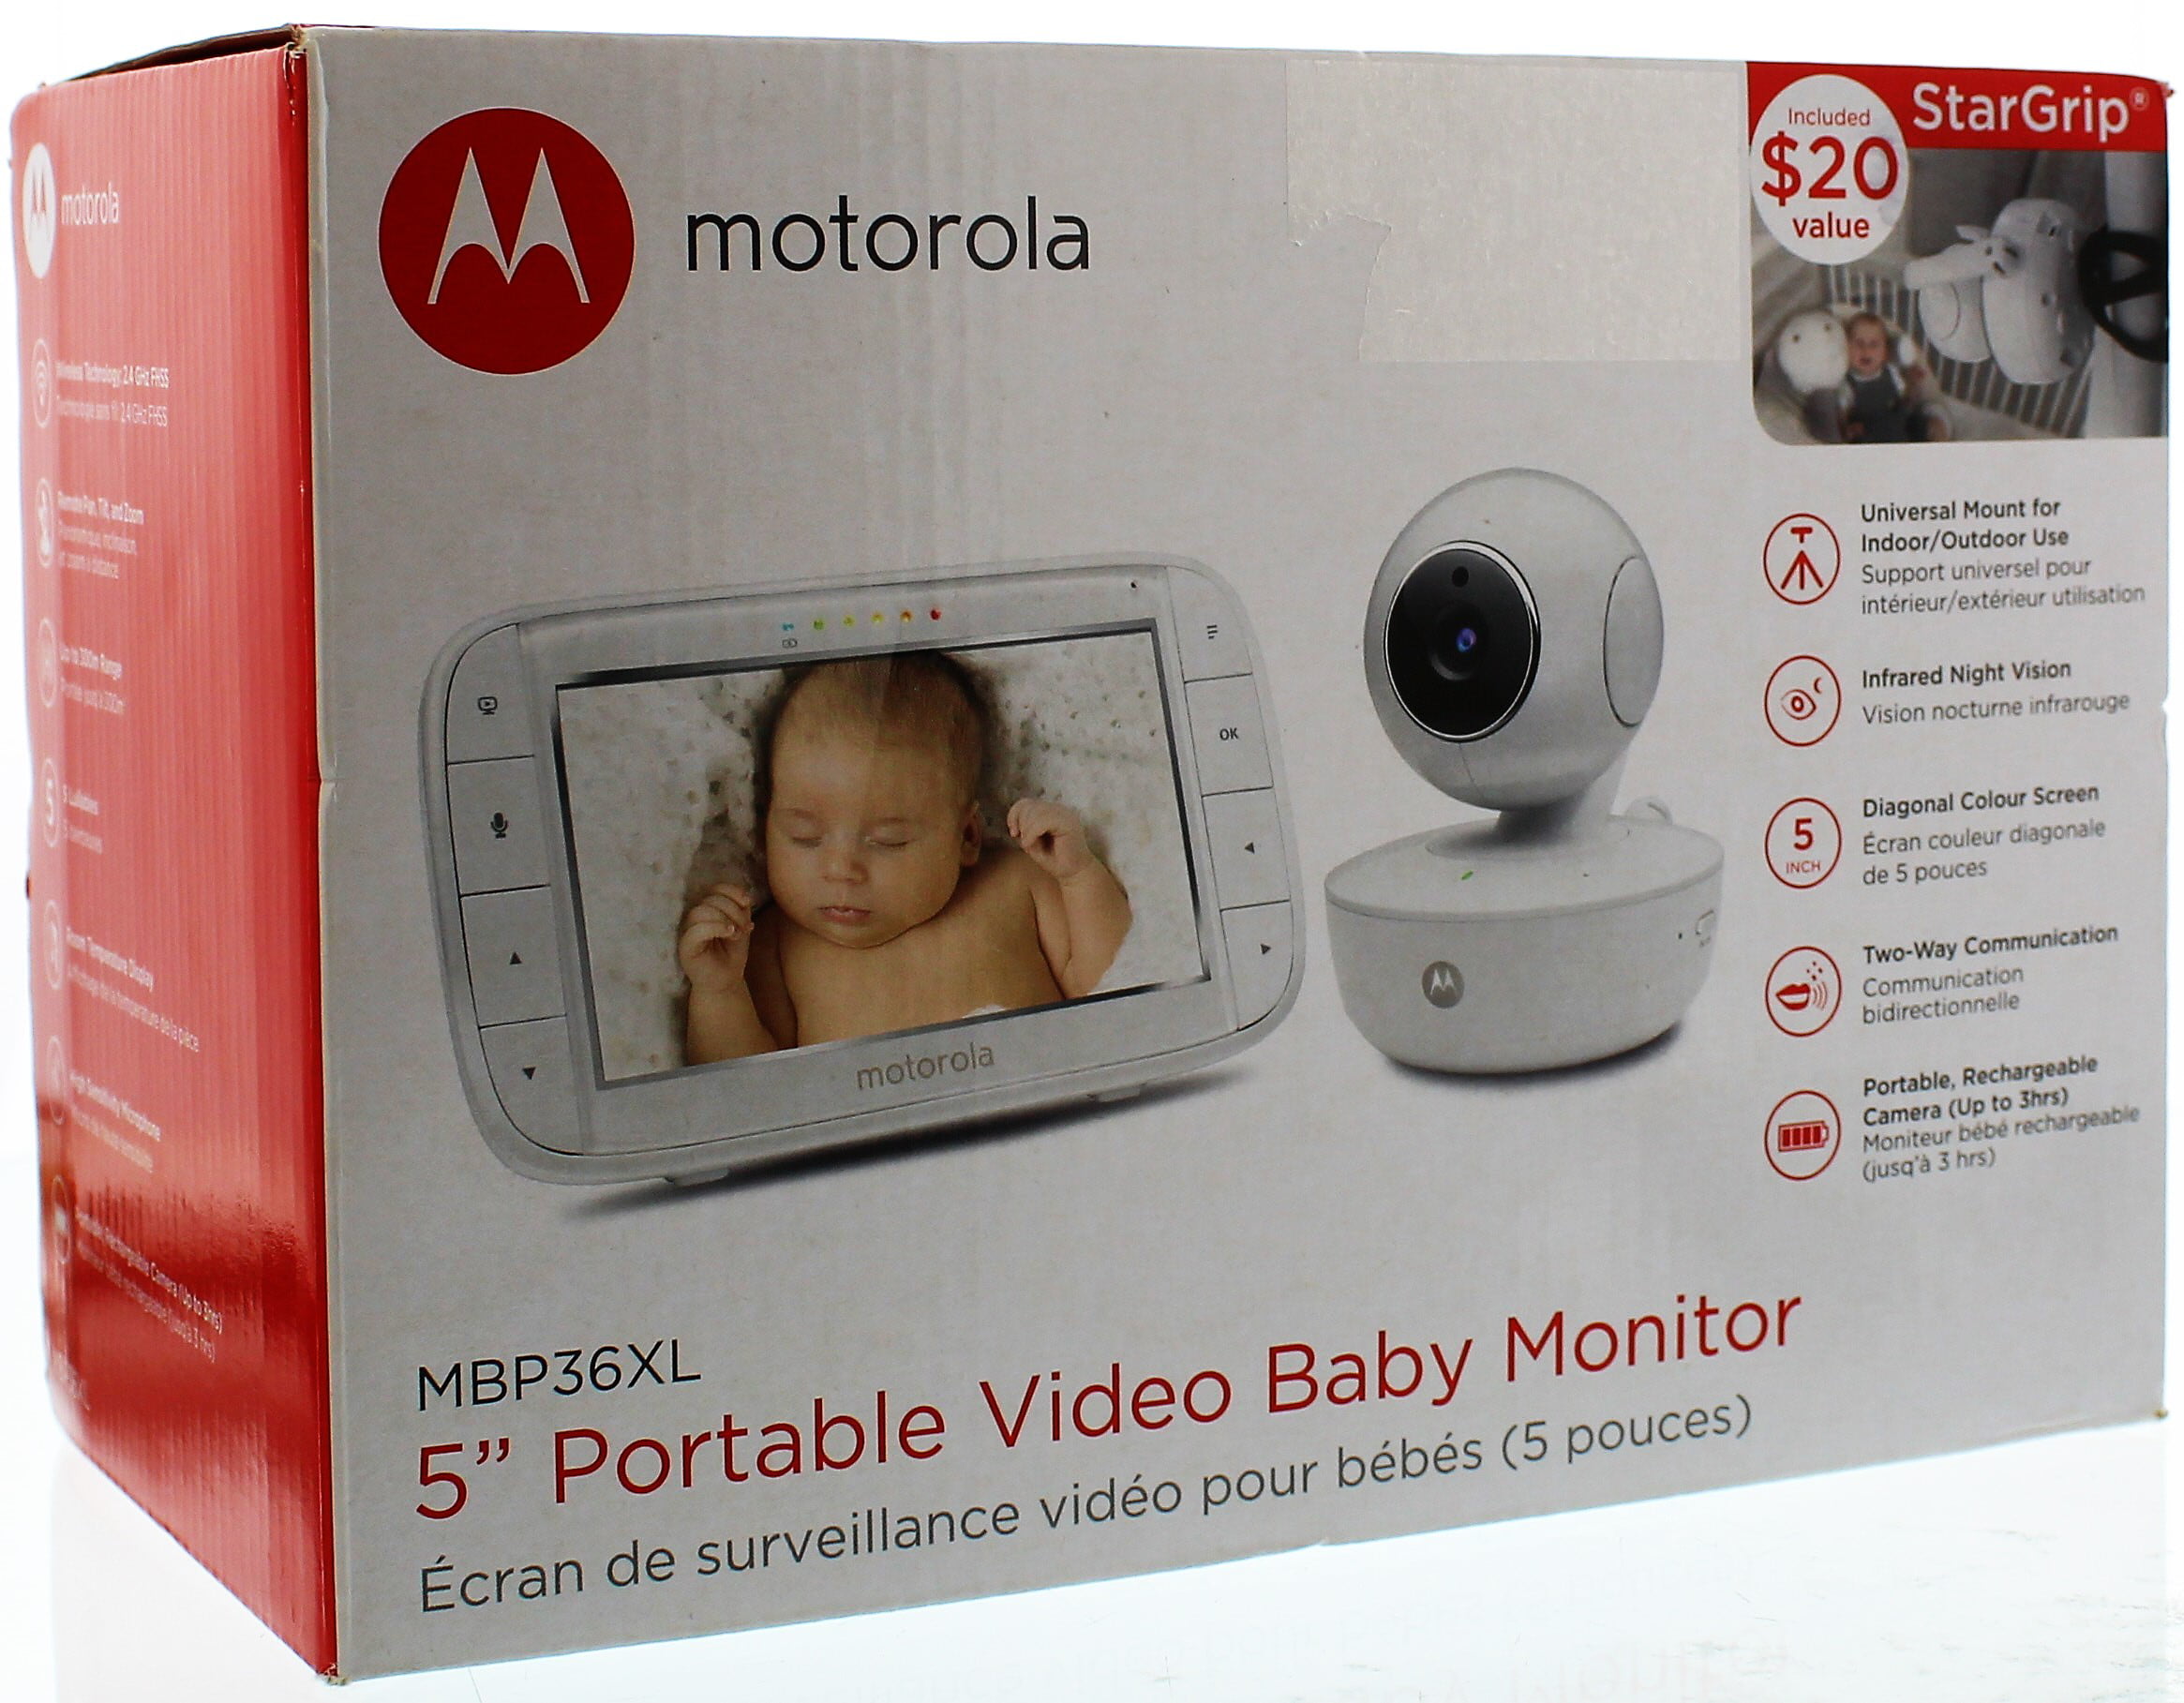 5 portable video baby monitor motorola